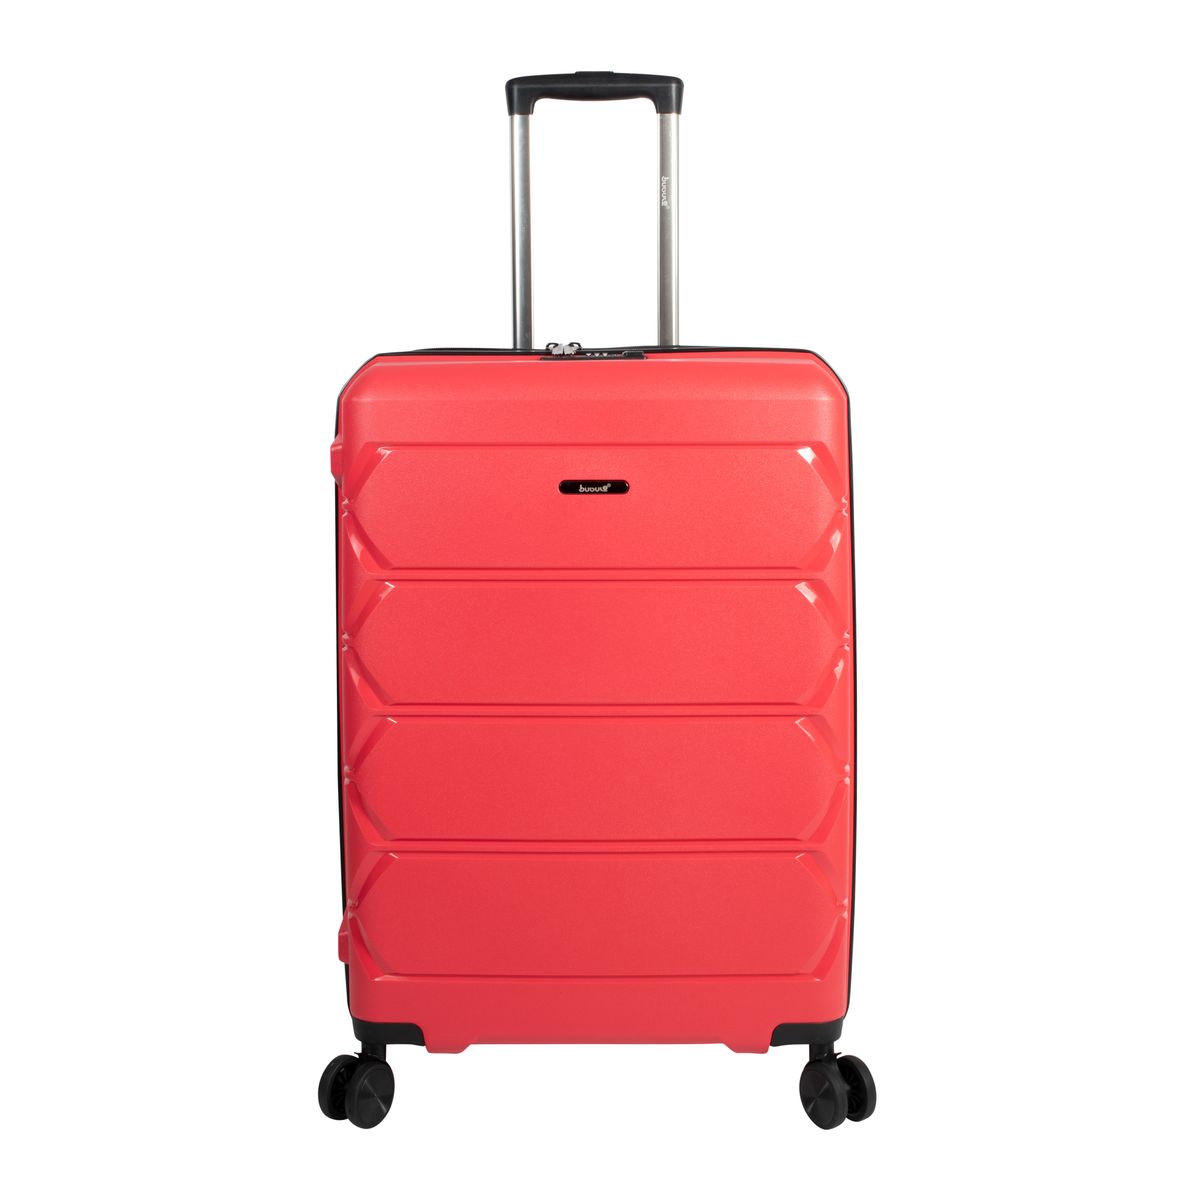 Bubule - PPL14 Hard Outer Shell Luggage Bag Suitcase